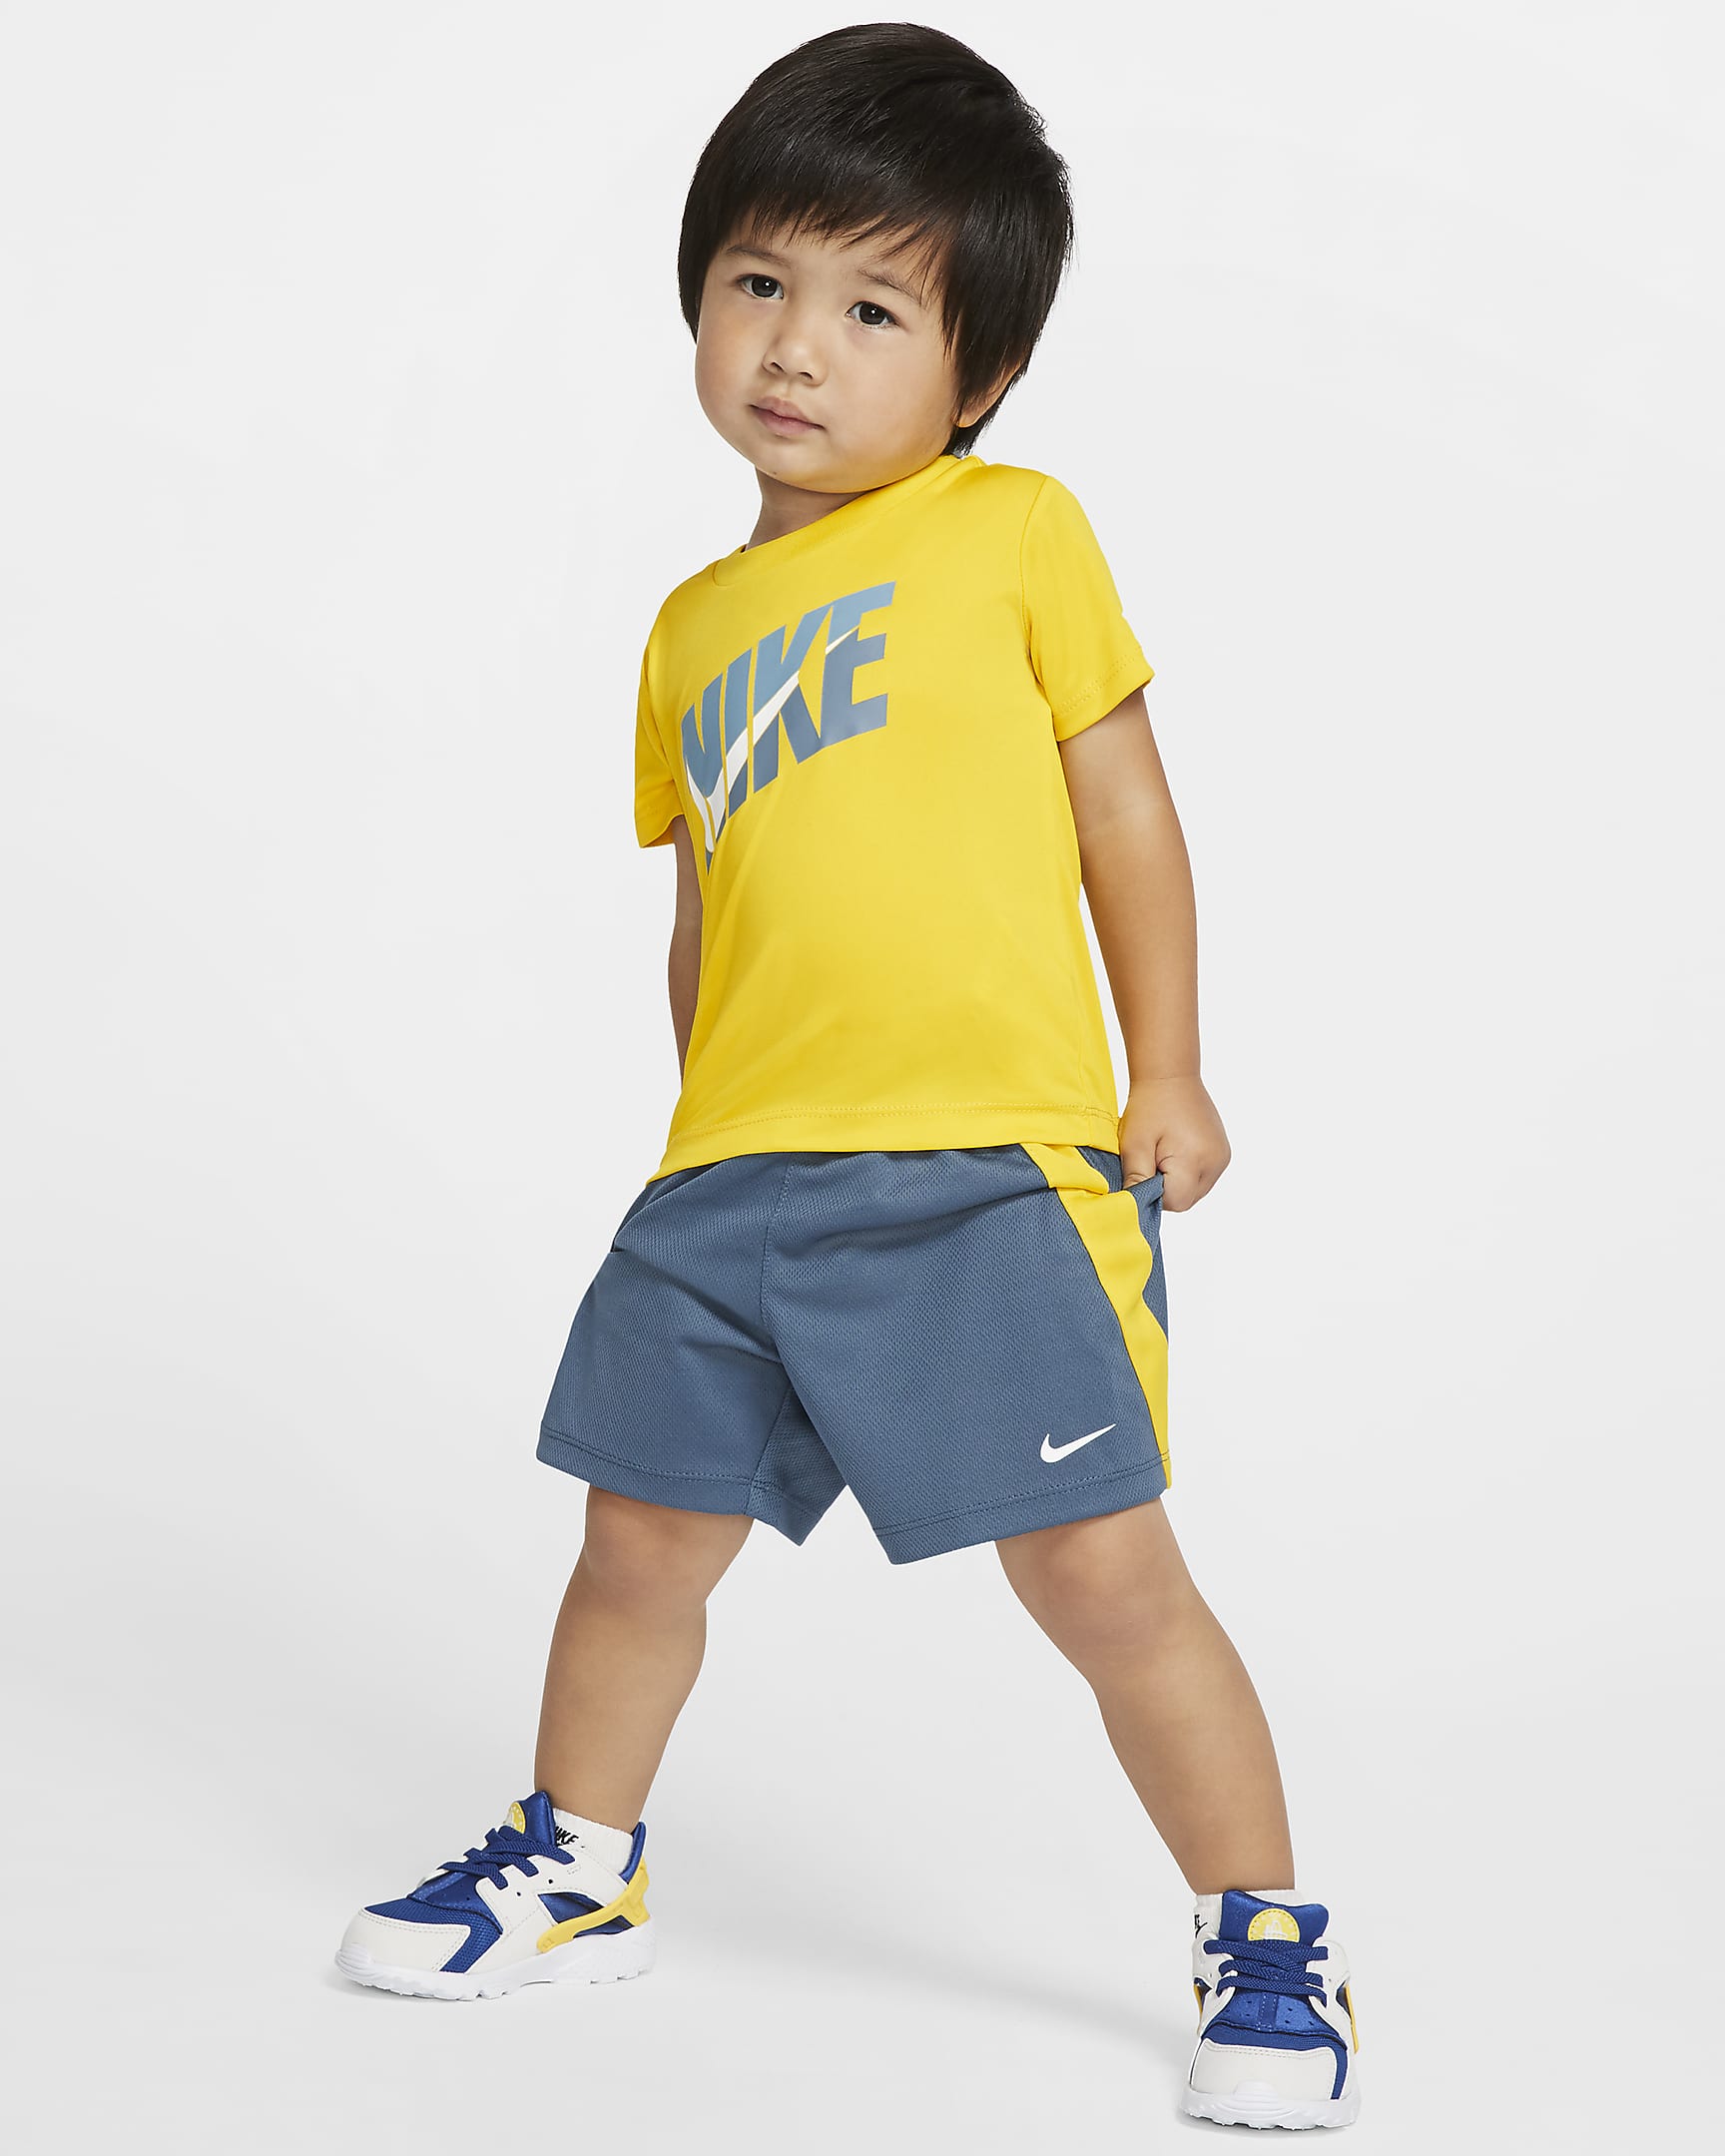 Nike Dri-FIT Baby (12-24M) T-Shirt and Shorts Set. Nike.com